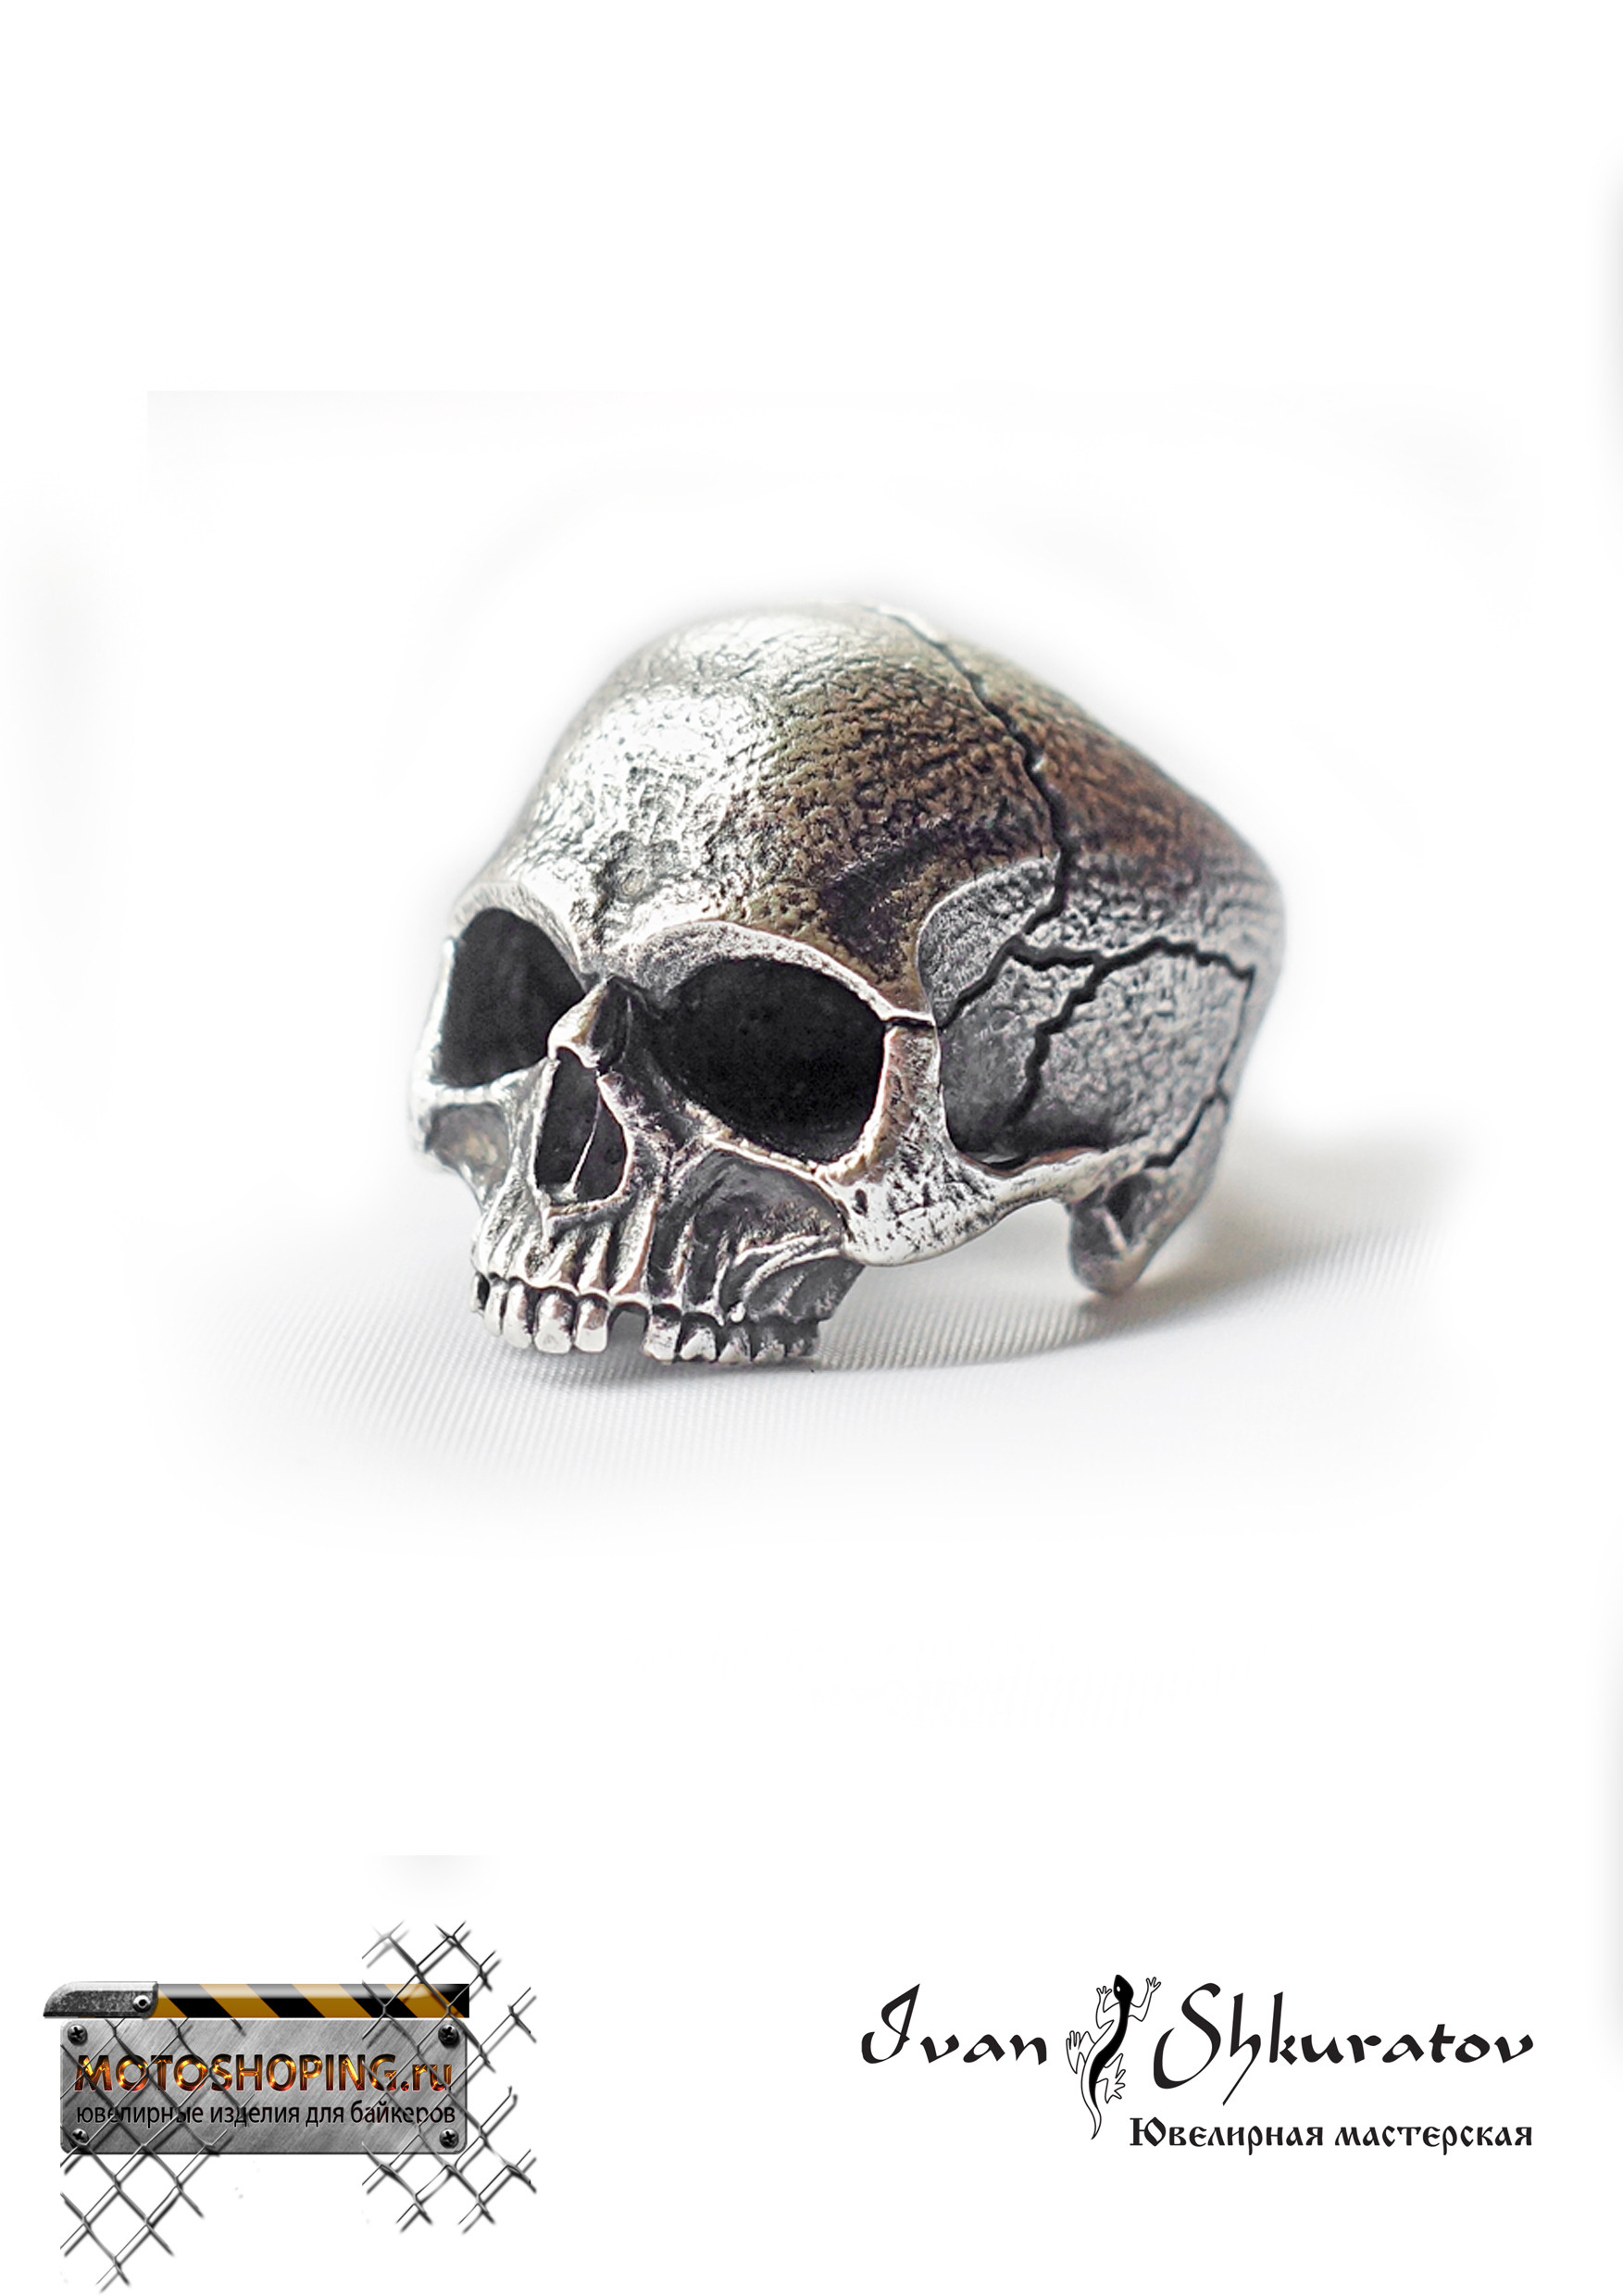 Кольцо череп вес 48 грамм. Сделал в серийку http://motoshoping.ru/koltso-a-76